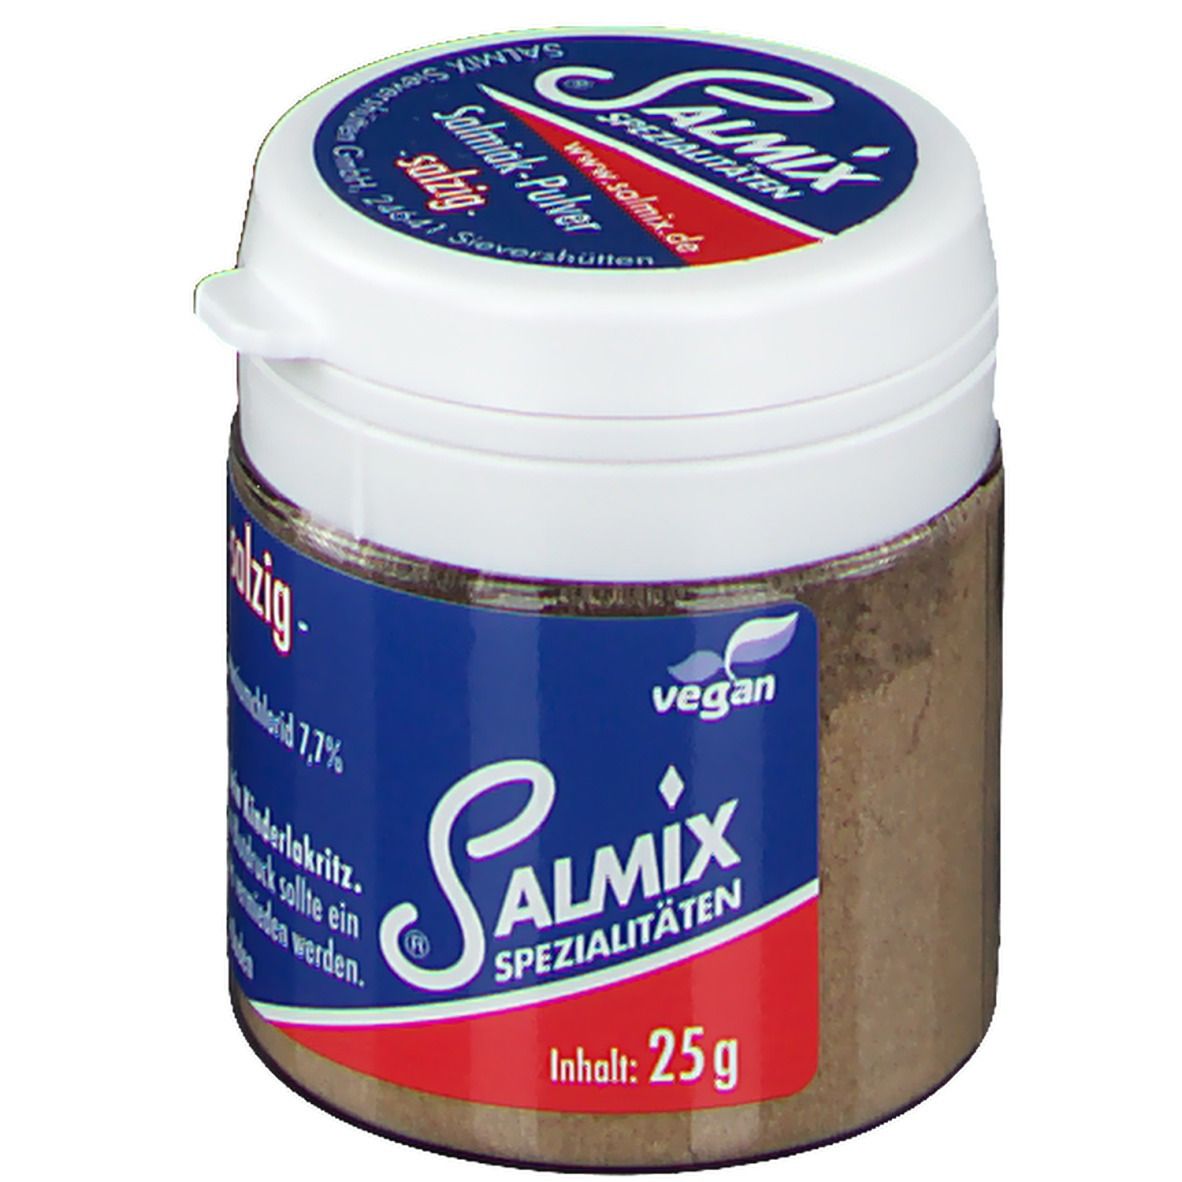 Salmix® Salmiak-Pulver salzig